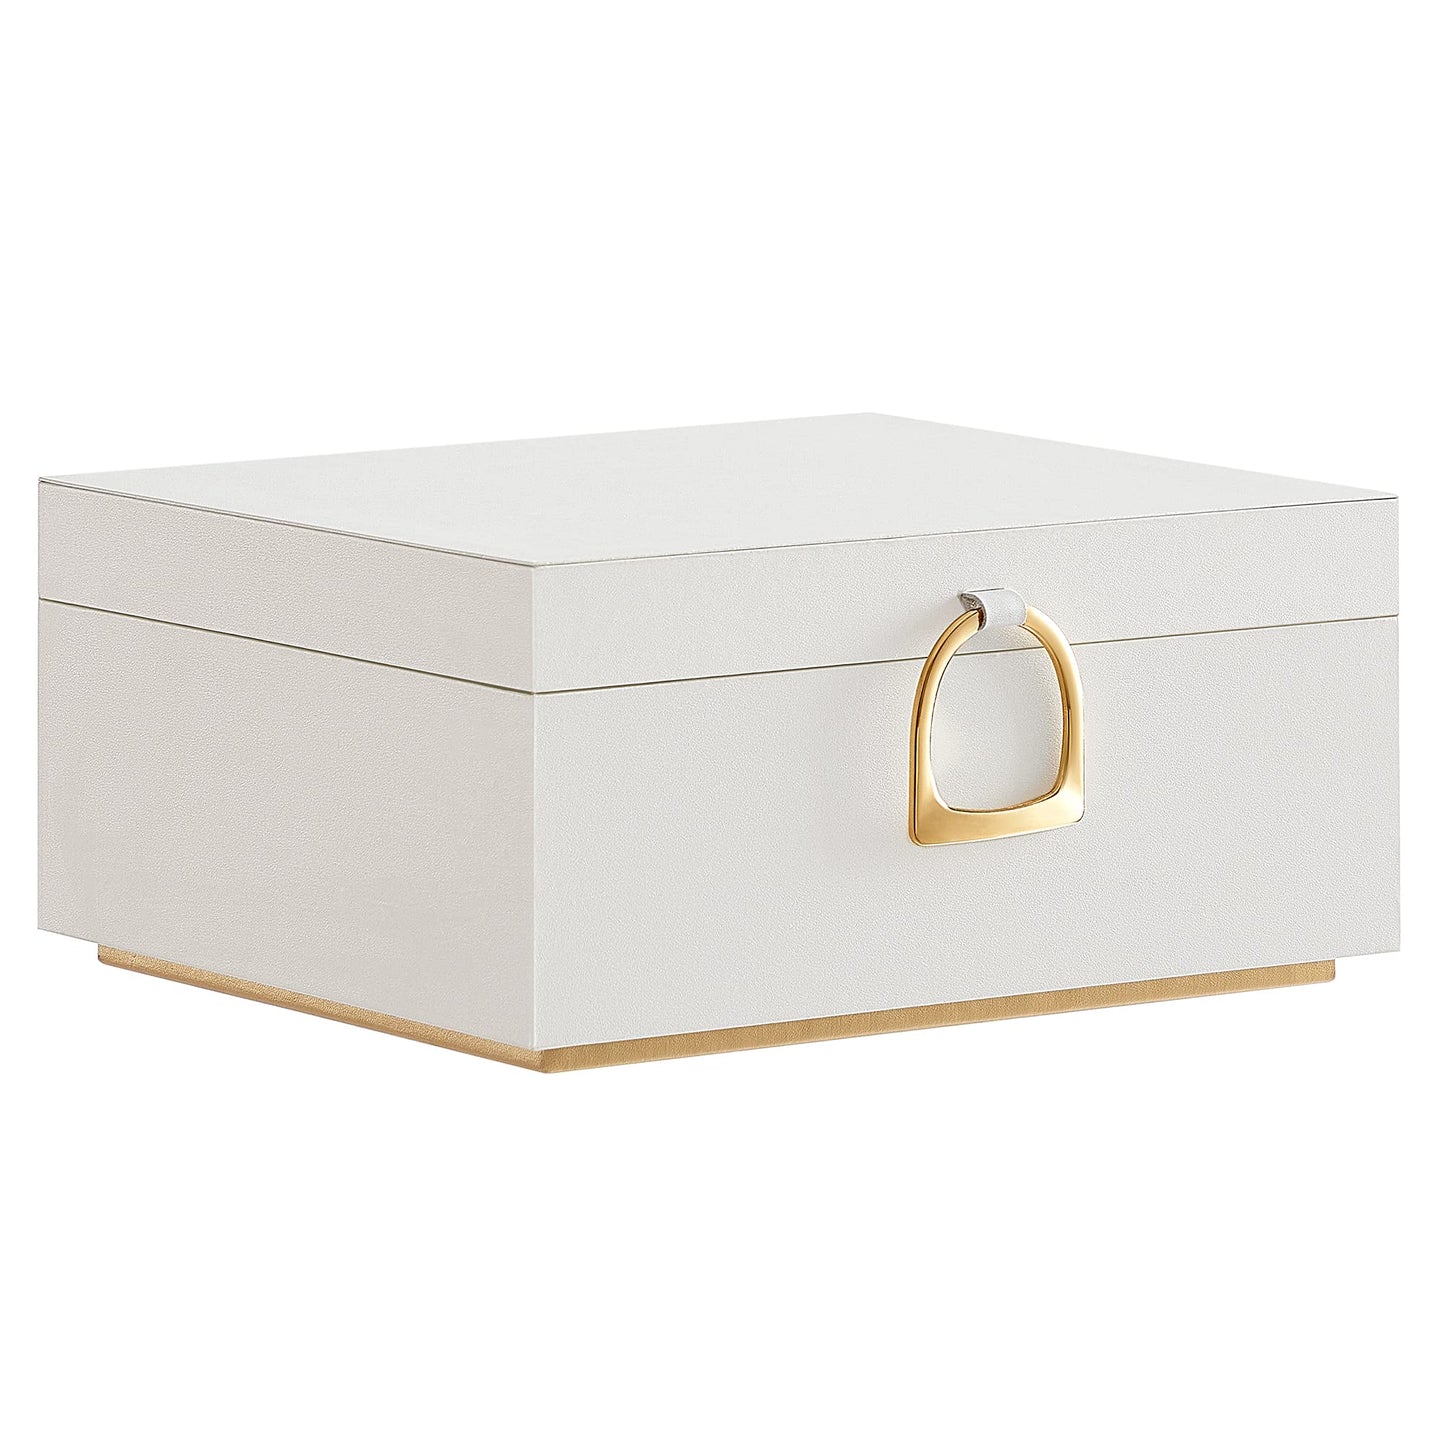 2-Layer Jewelry Box, Jewelry Organizer with Handle, Removable Jewelry Tray, Jewelry Storage, Floating Effect, 8.1 x 9.4 x 4.3 Inches, Gift Idea